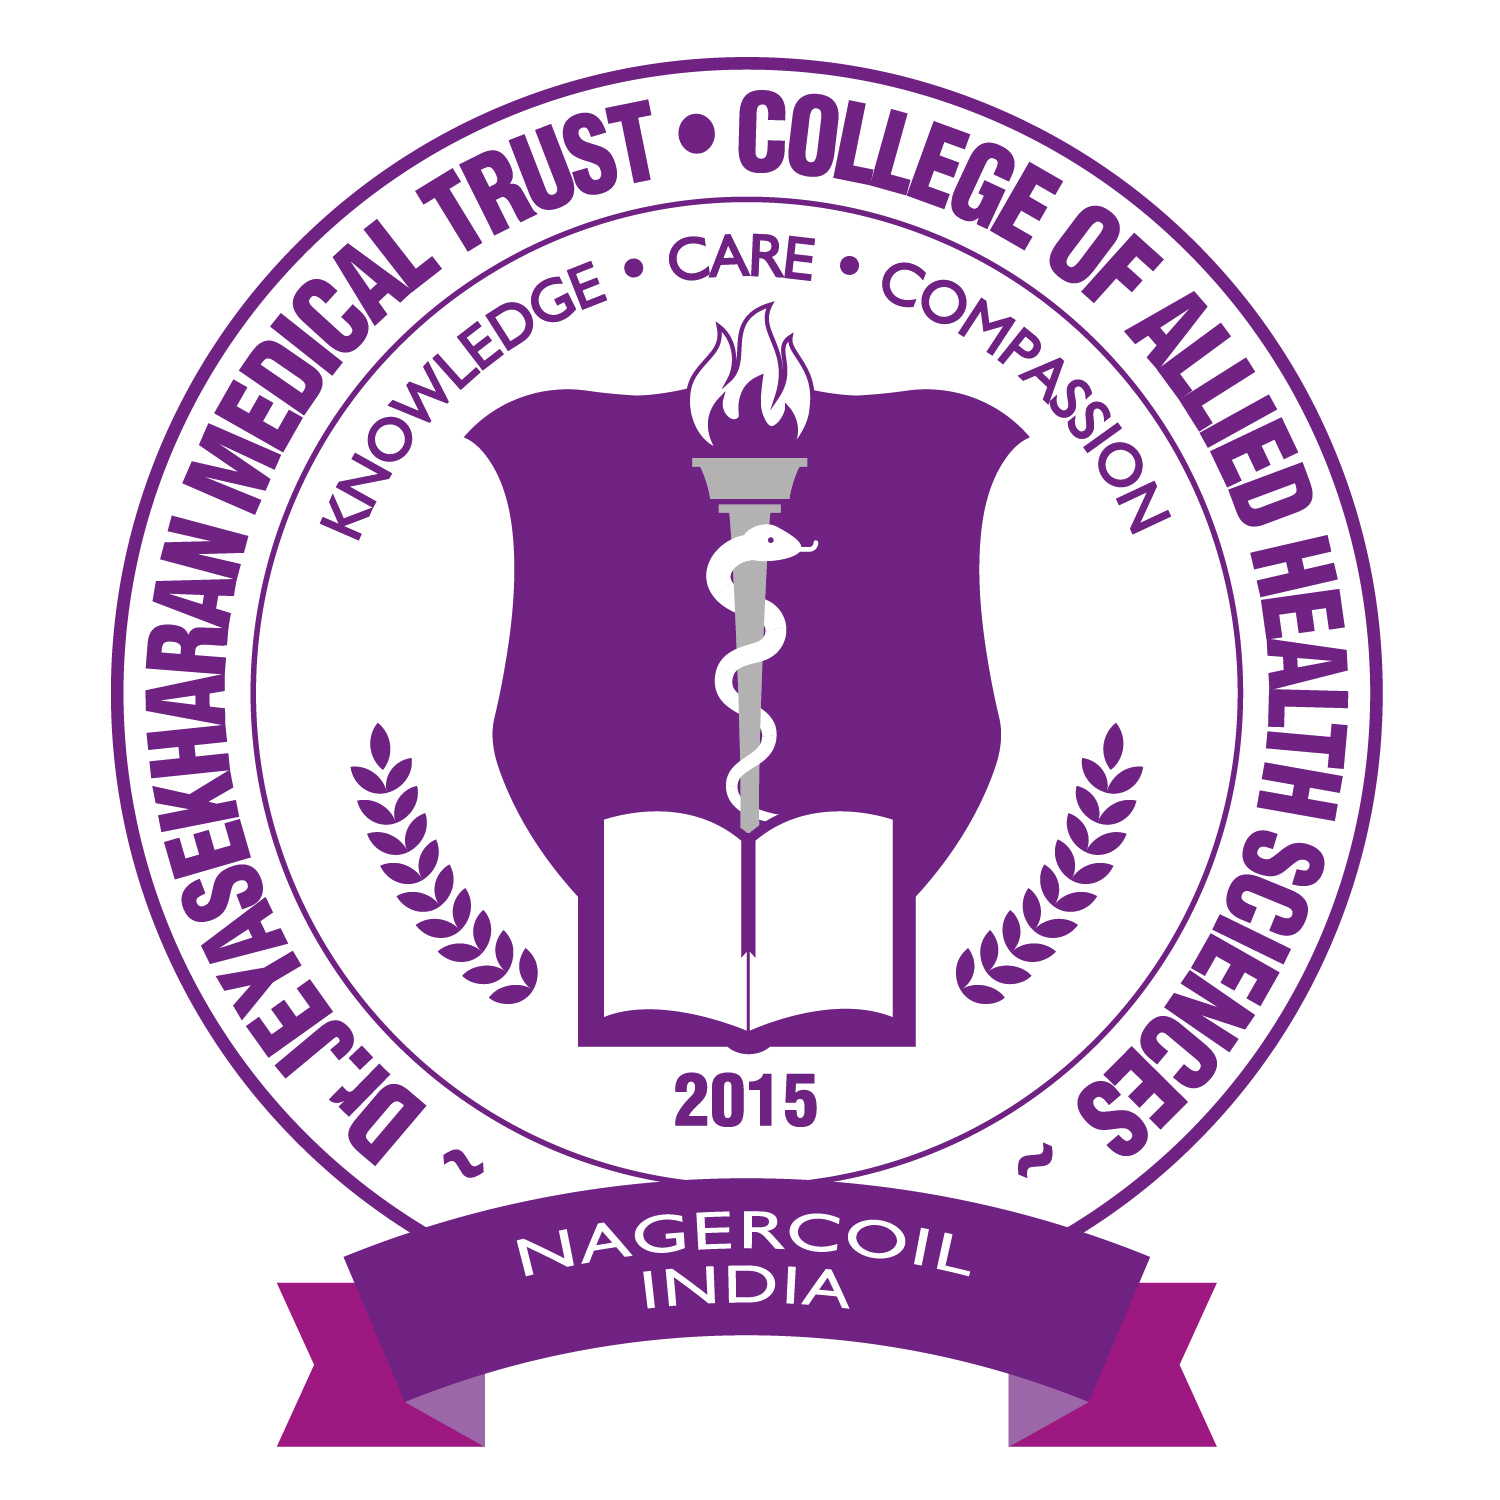 Drjmt College Of Allied Health Sciences Drjeyasekharan Medical Trust